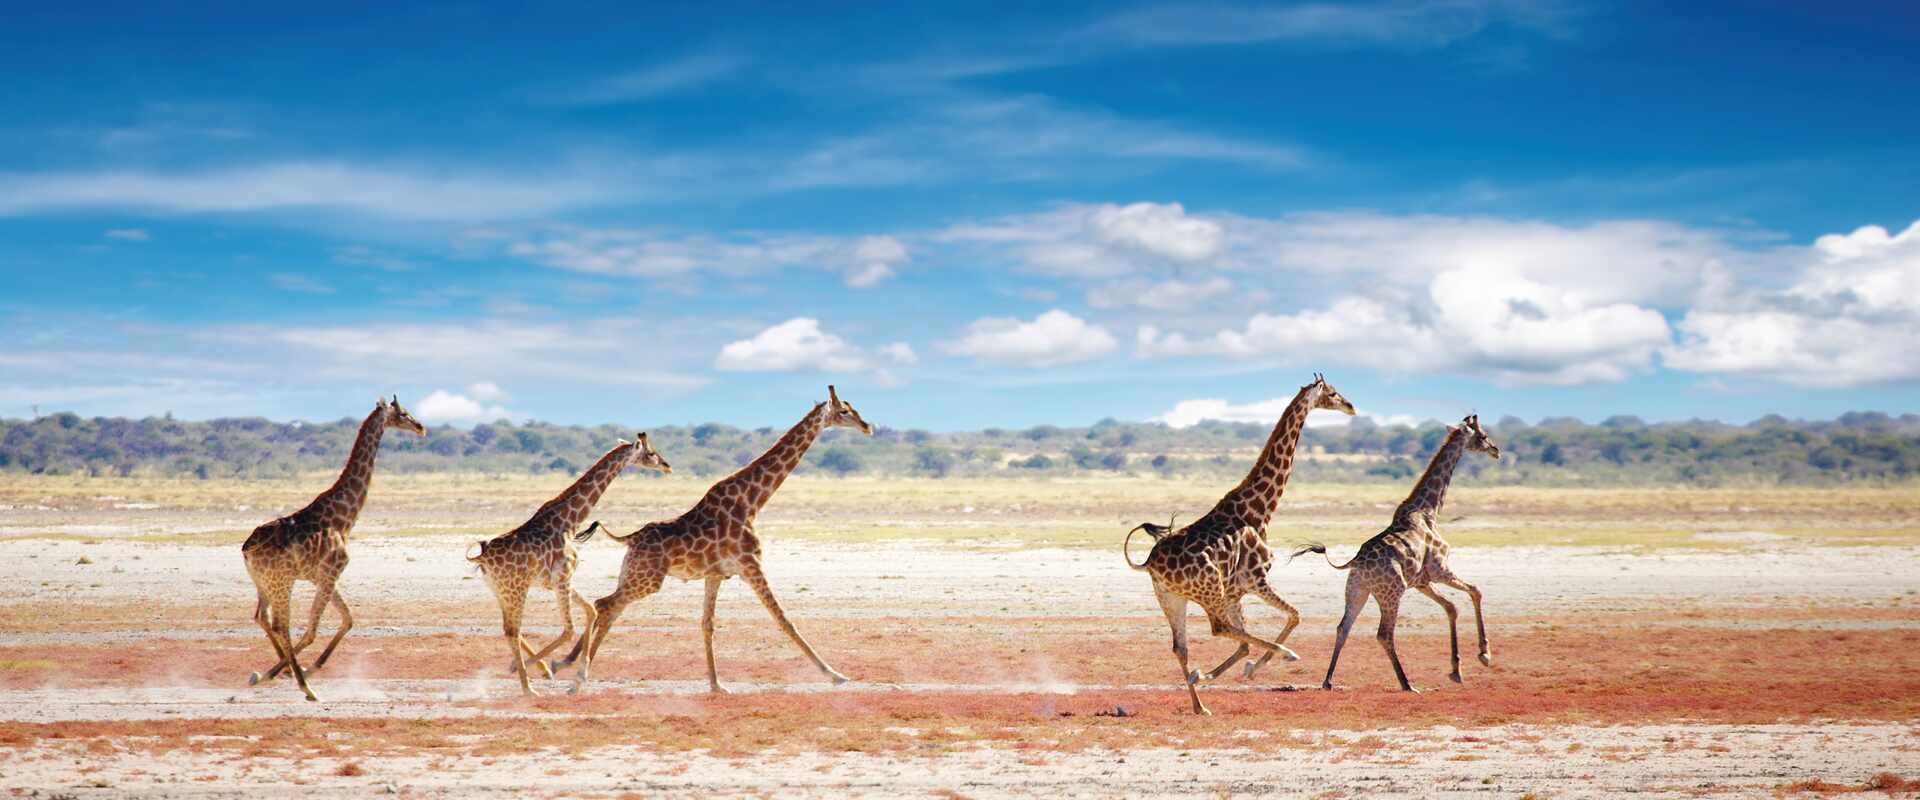 Giraffes running in estonia national park, Namibia